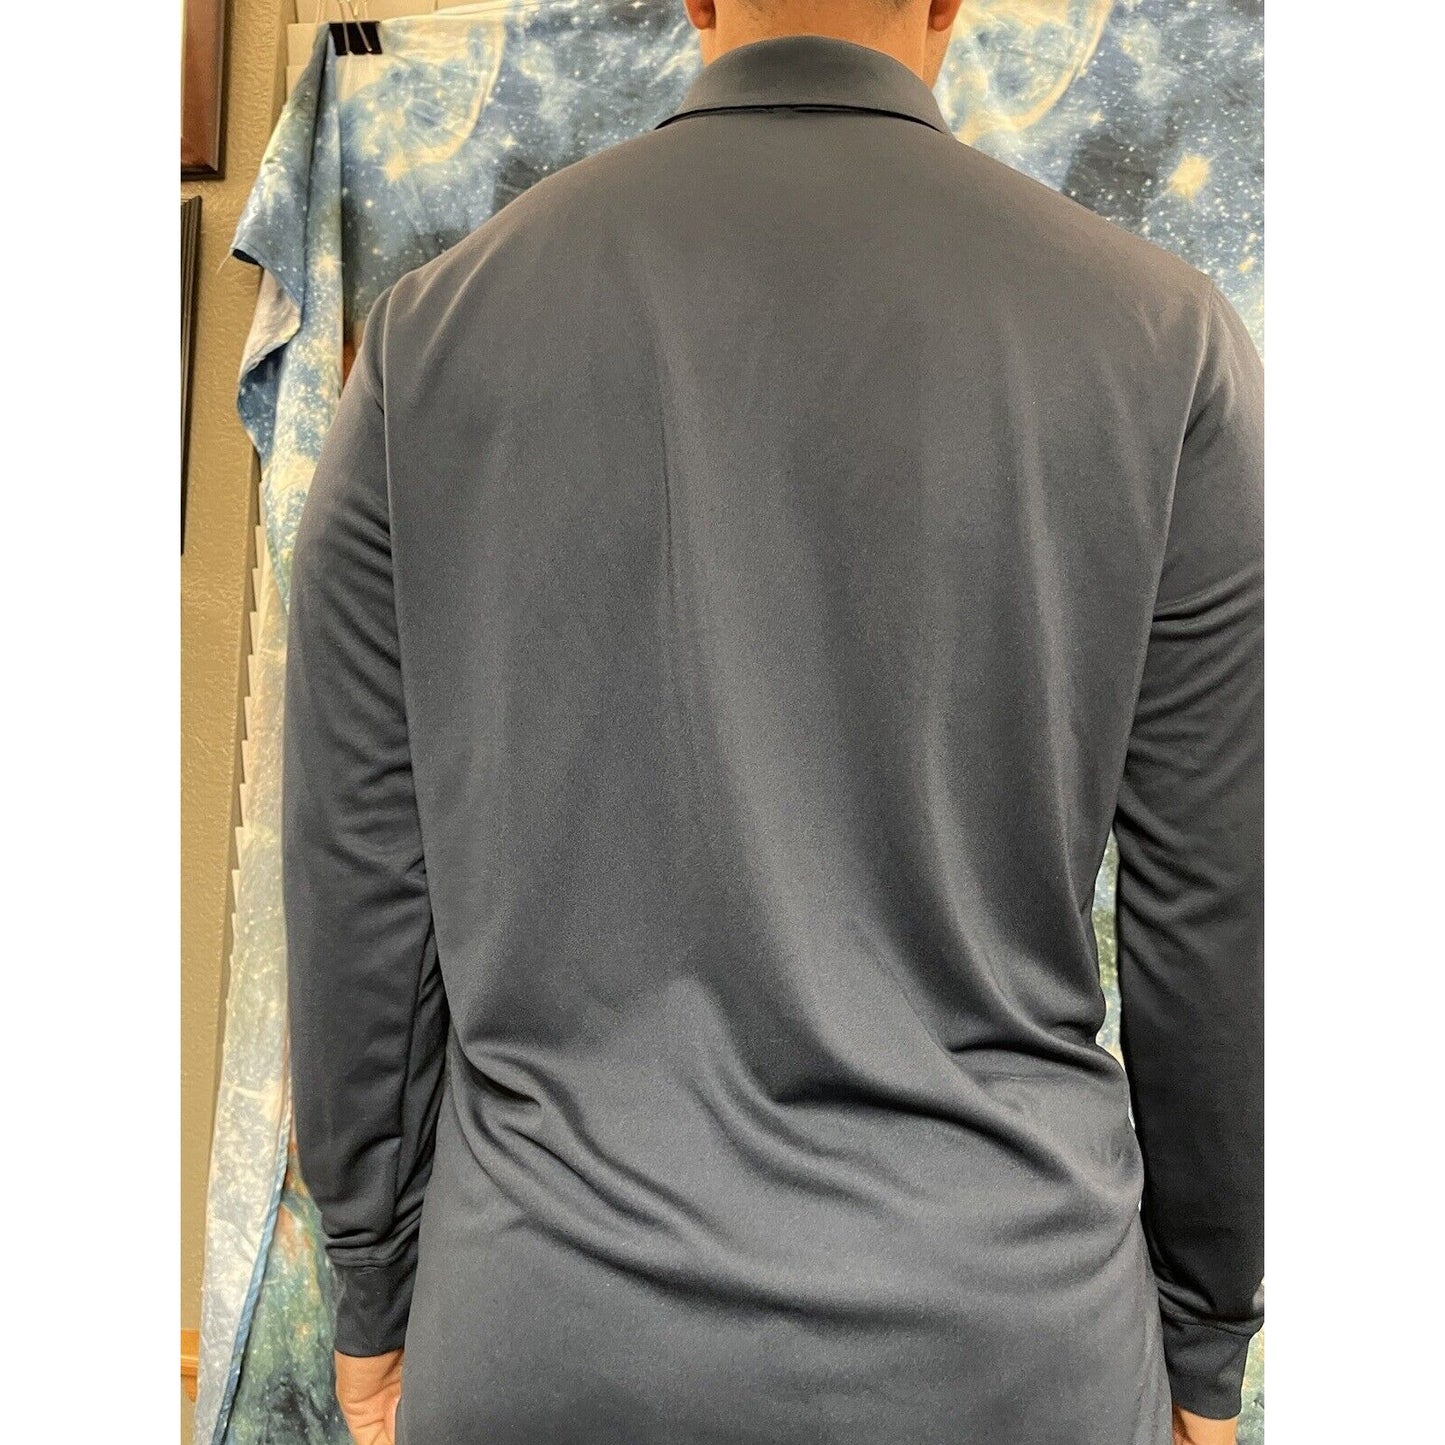 Men’s Dark Blue Los Angeles Lakers Nike Golf Polo Shirt Dri fit